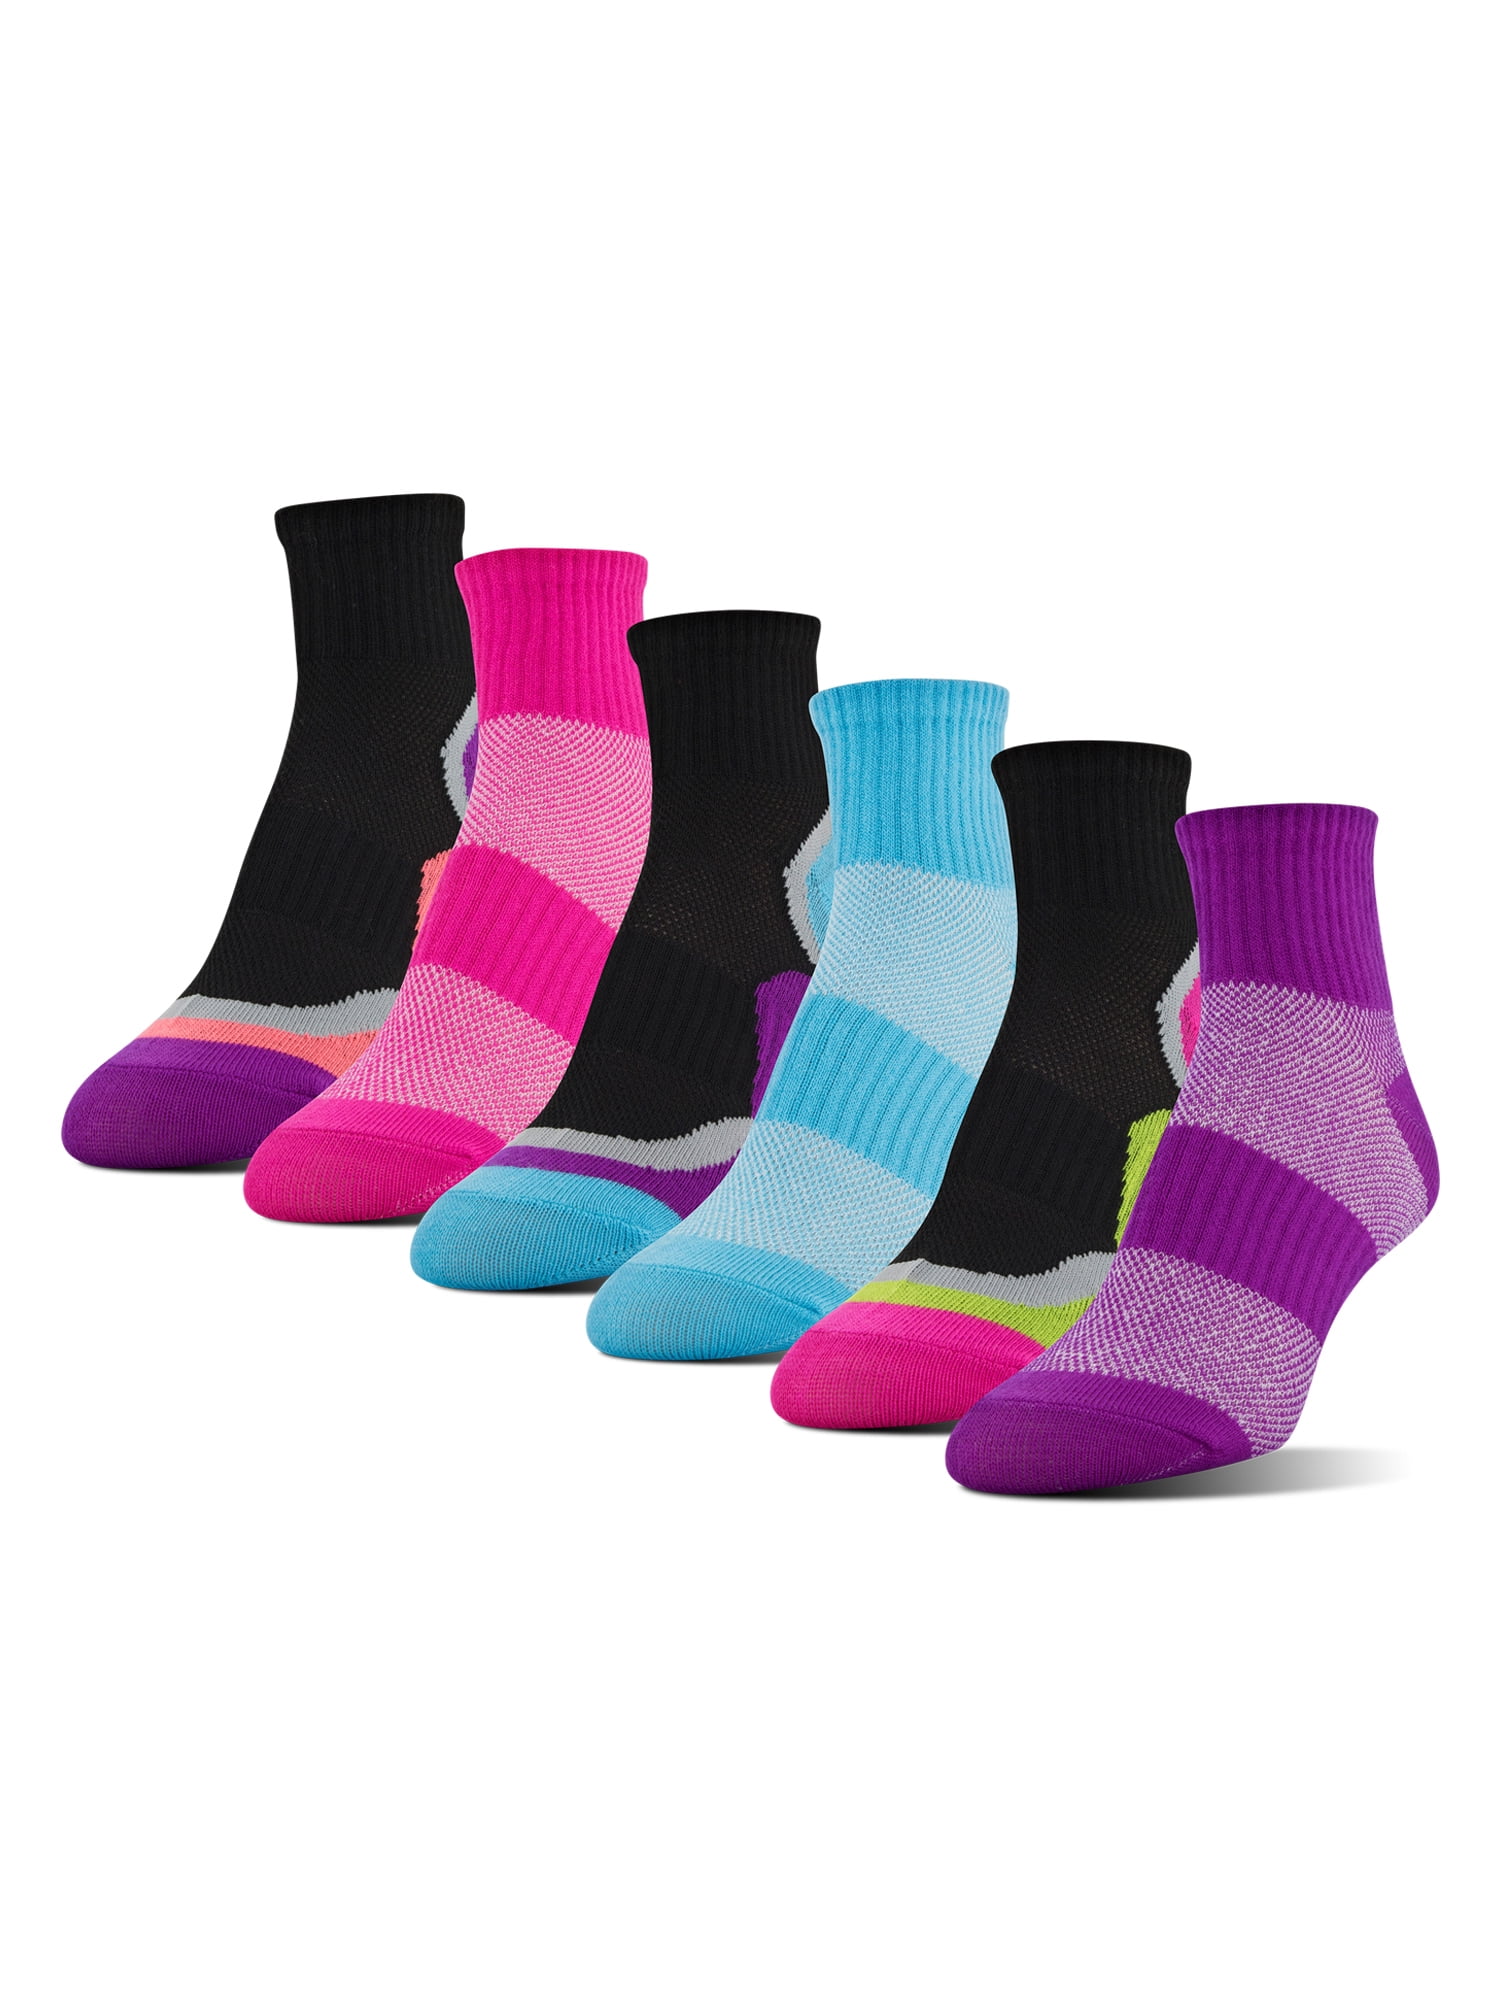 Athletic Works Women's Ultralite Ankle Socks, 6 Pairs - Walmart.com